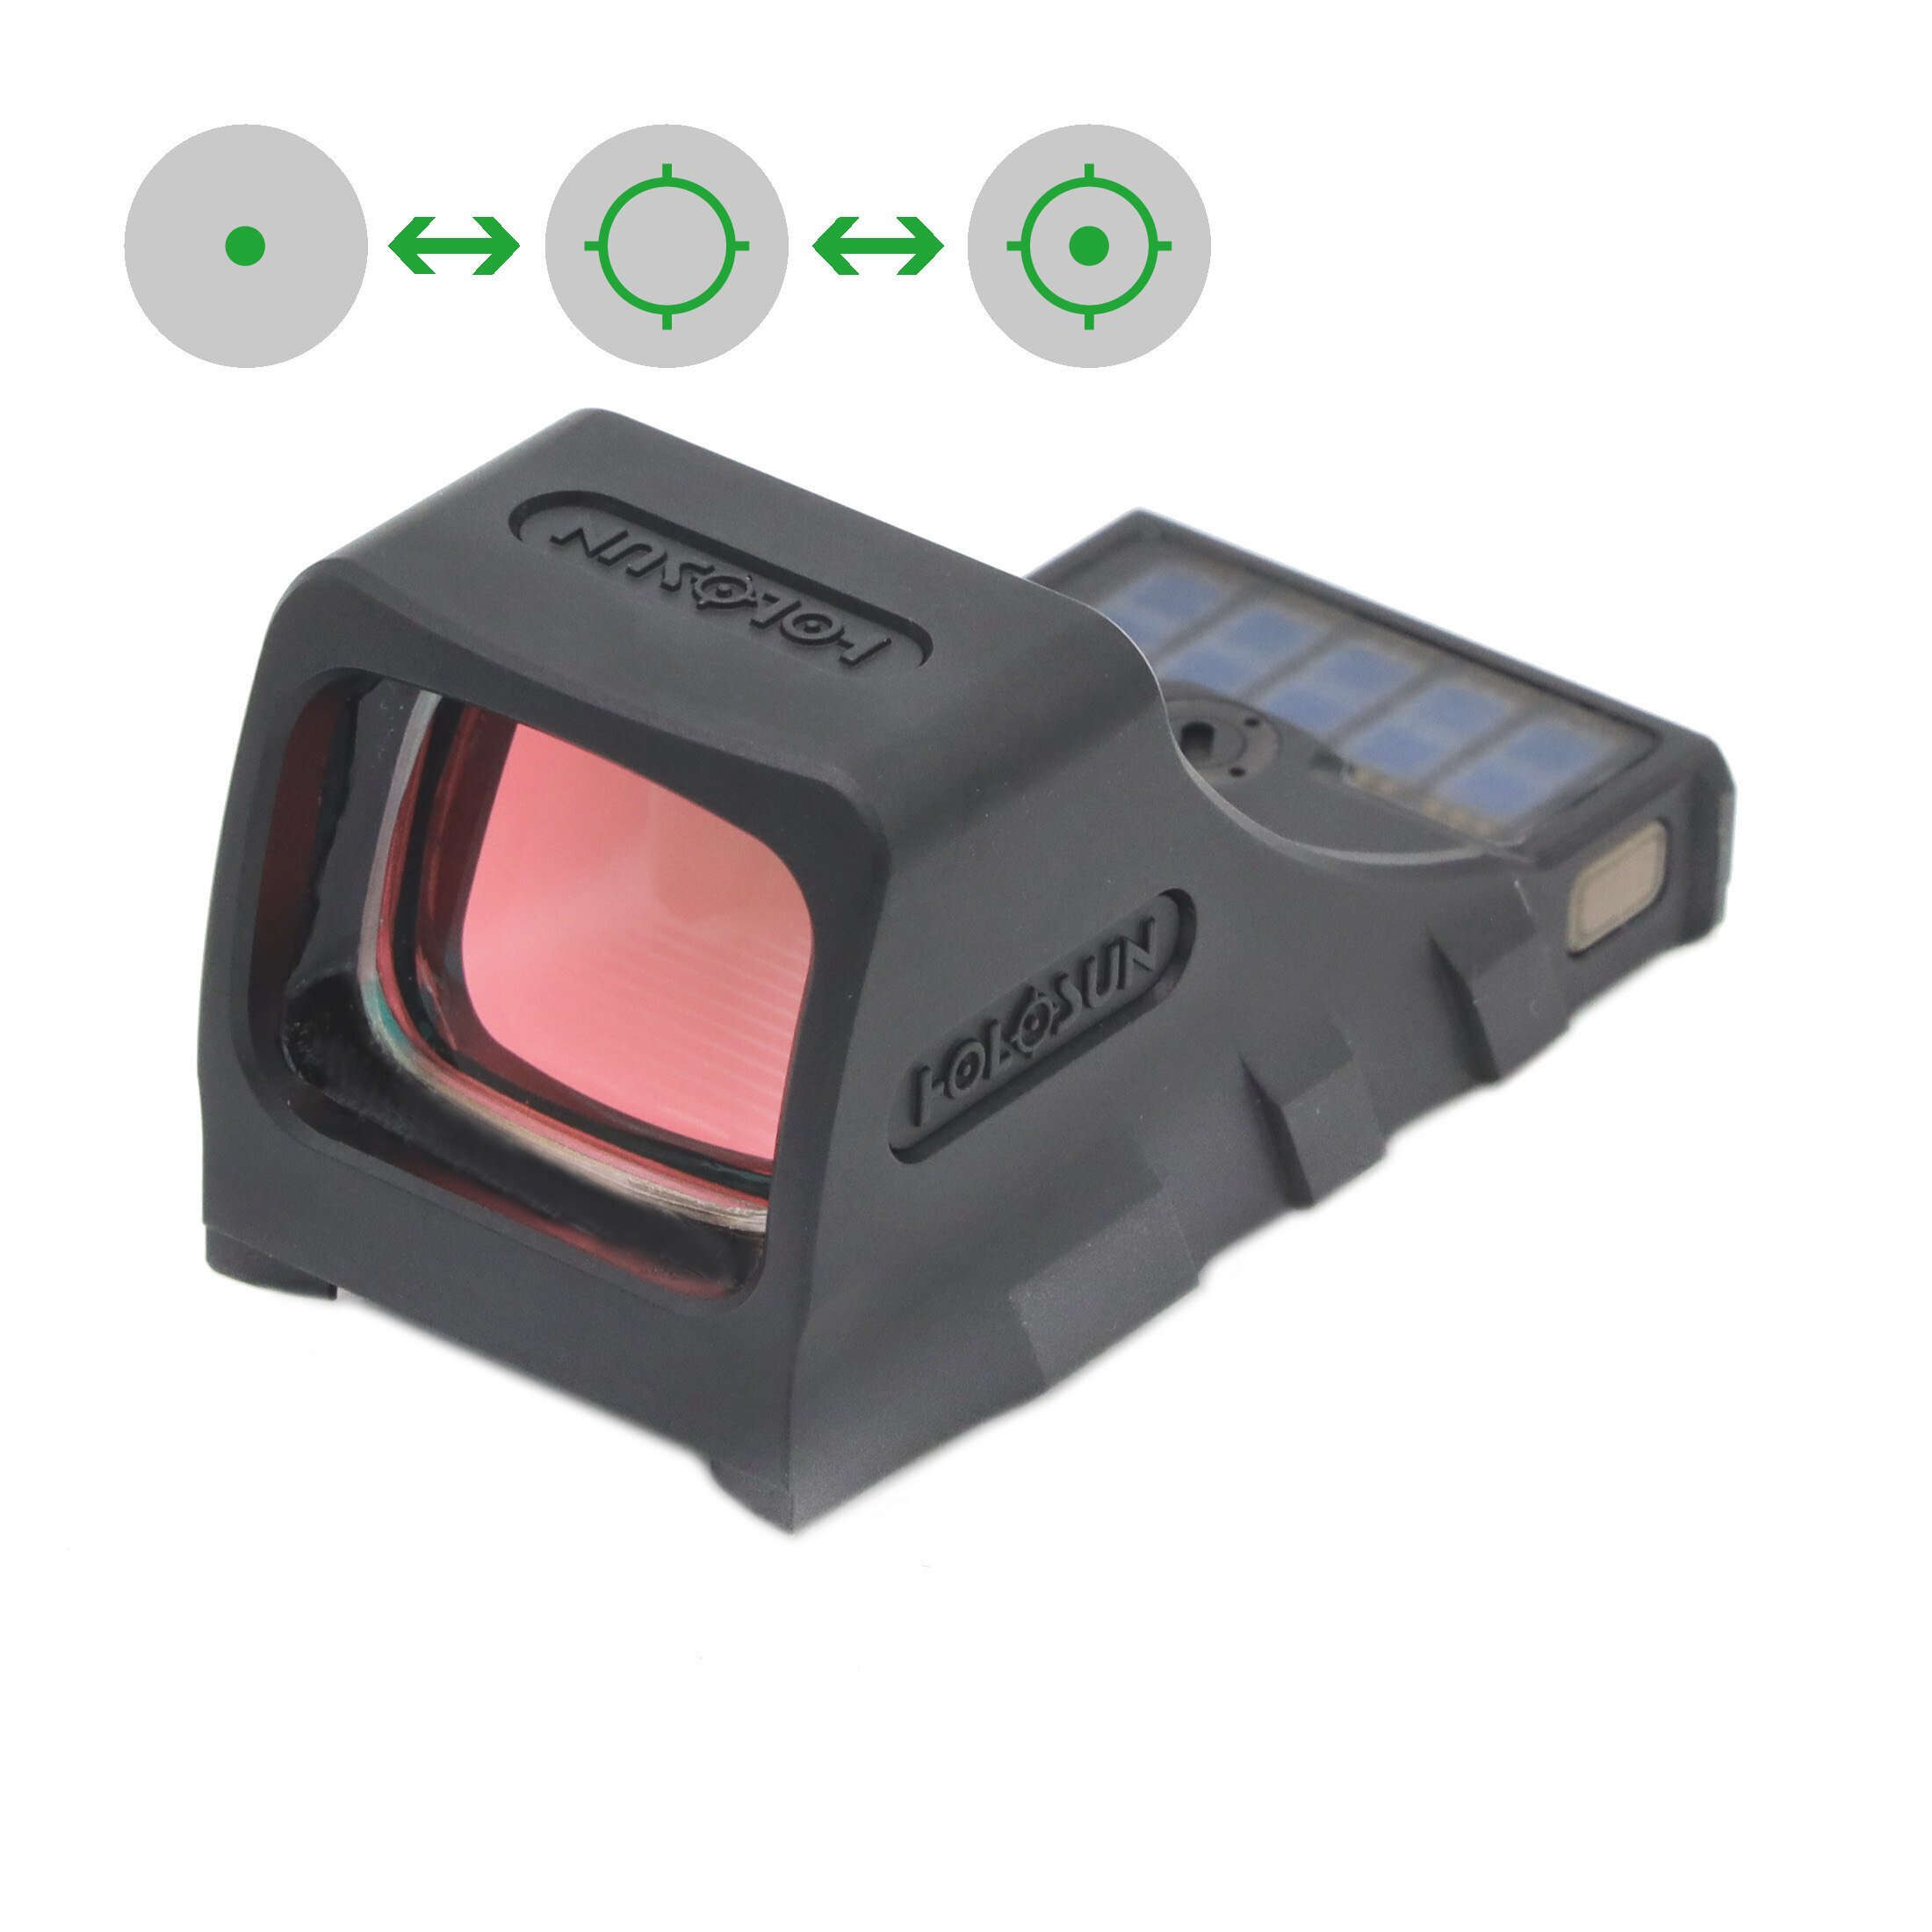 Holosun SCS-PDP-GR open reflex green dot sight switchable 2MOA dot, 32MOA circle dot reticle solar …